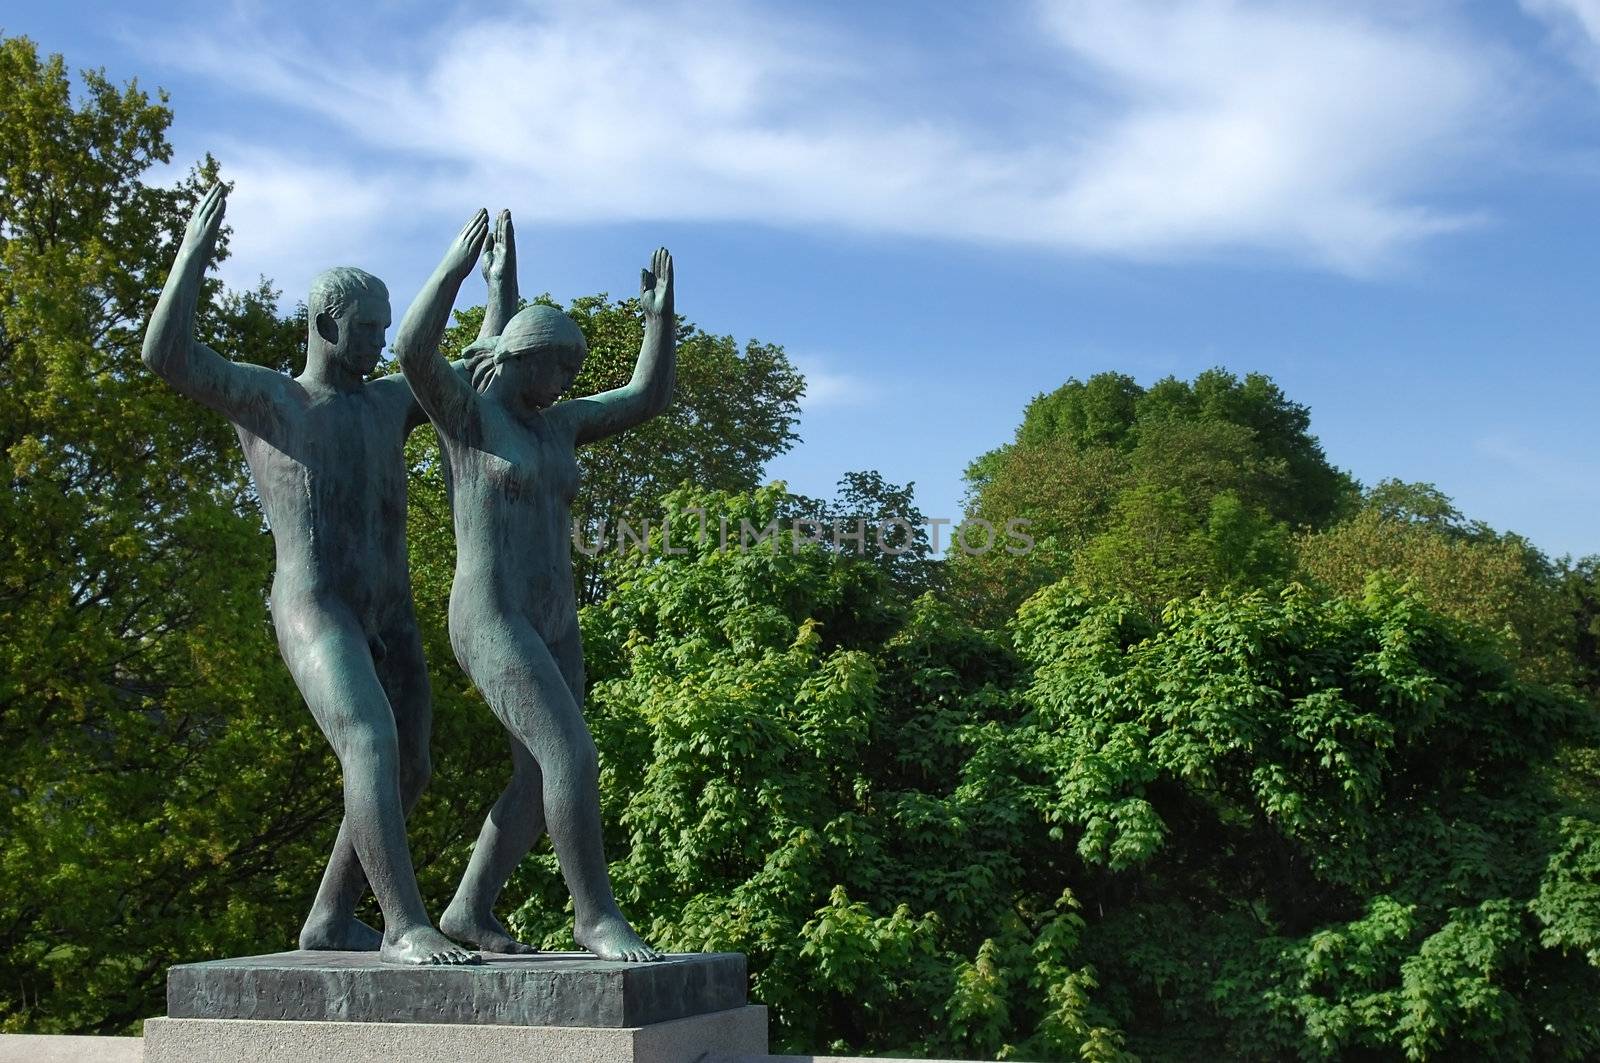 sculptures in Vigeland park , Oslo by irisphoto4